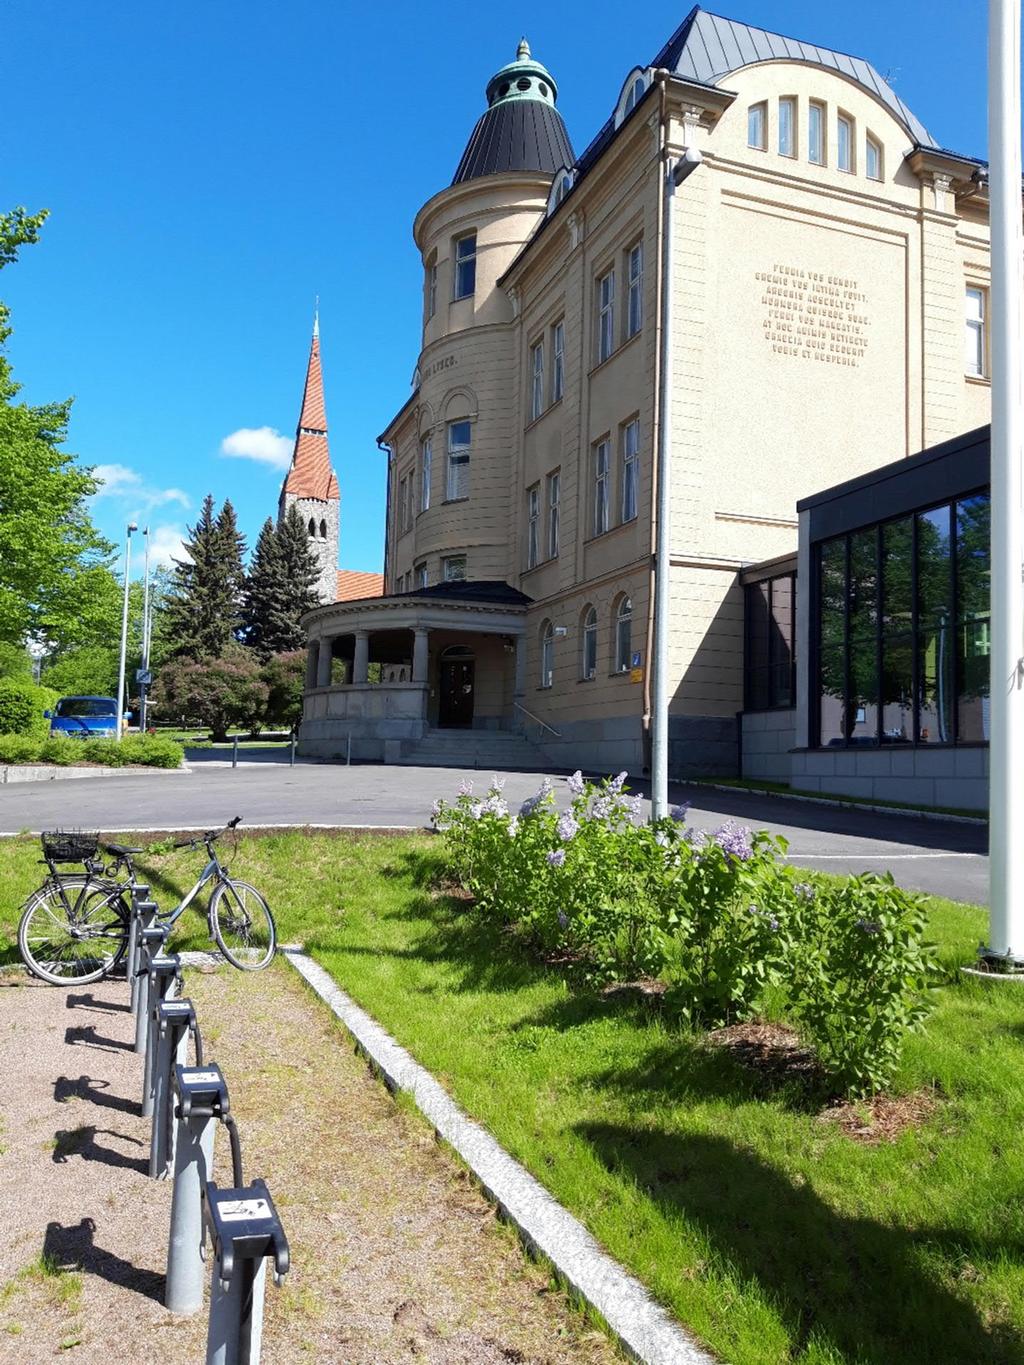 Tampereen klassillinen lukio 2019-2020 OPISKELIJAN OPAS Studieguide A Student s guide Guide de l